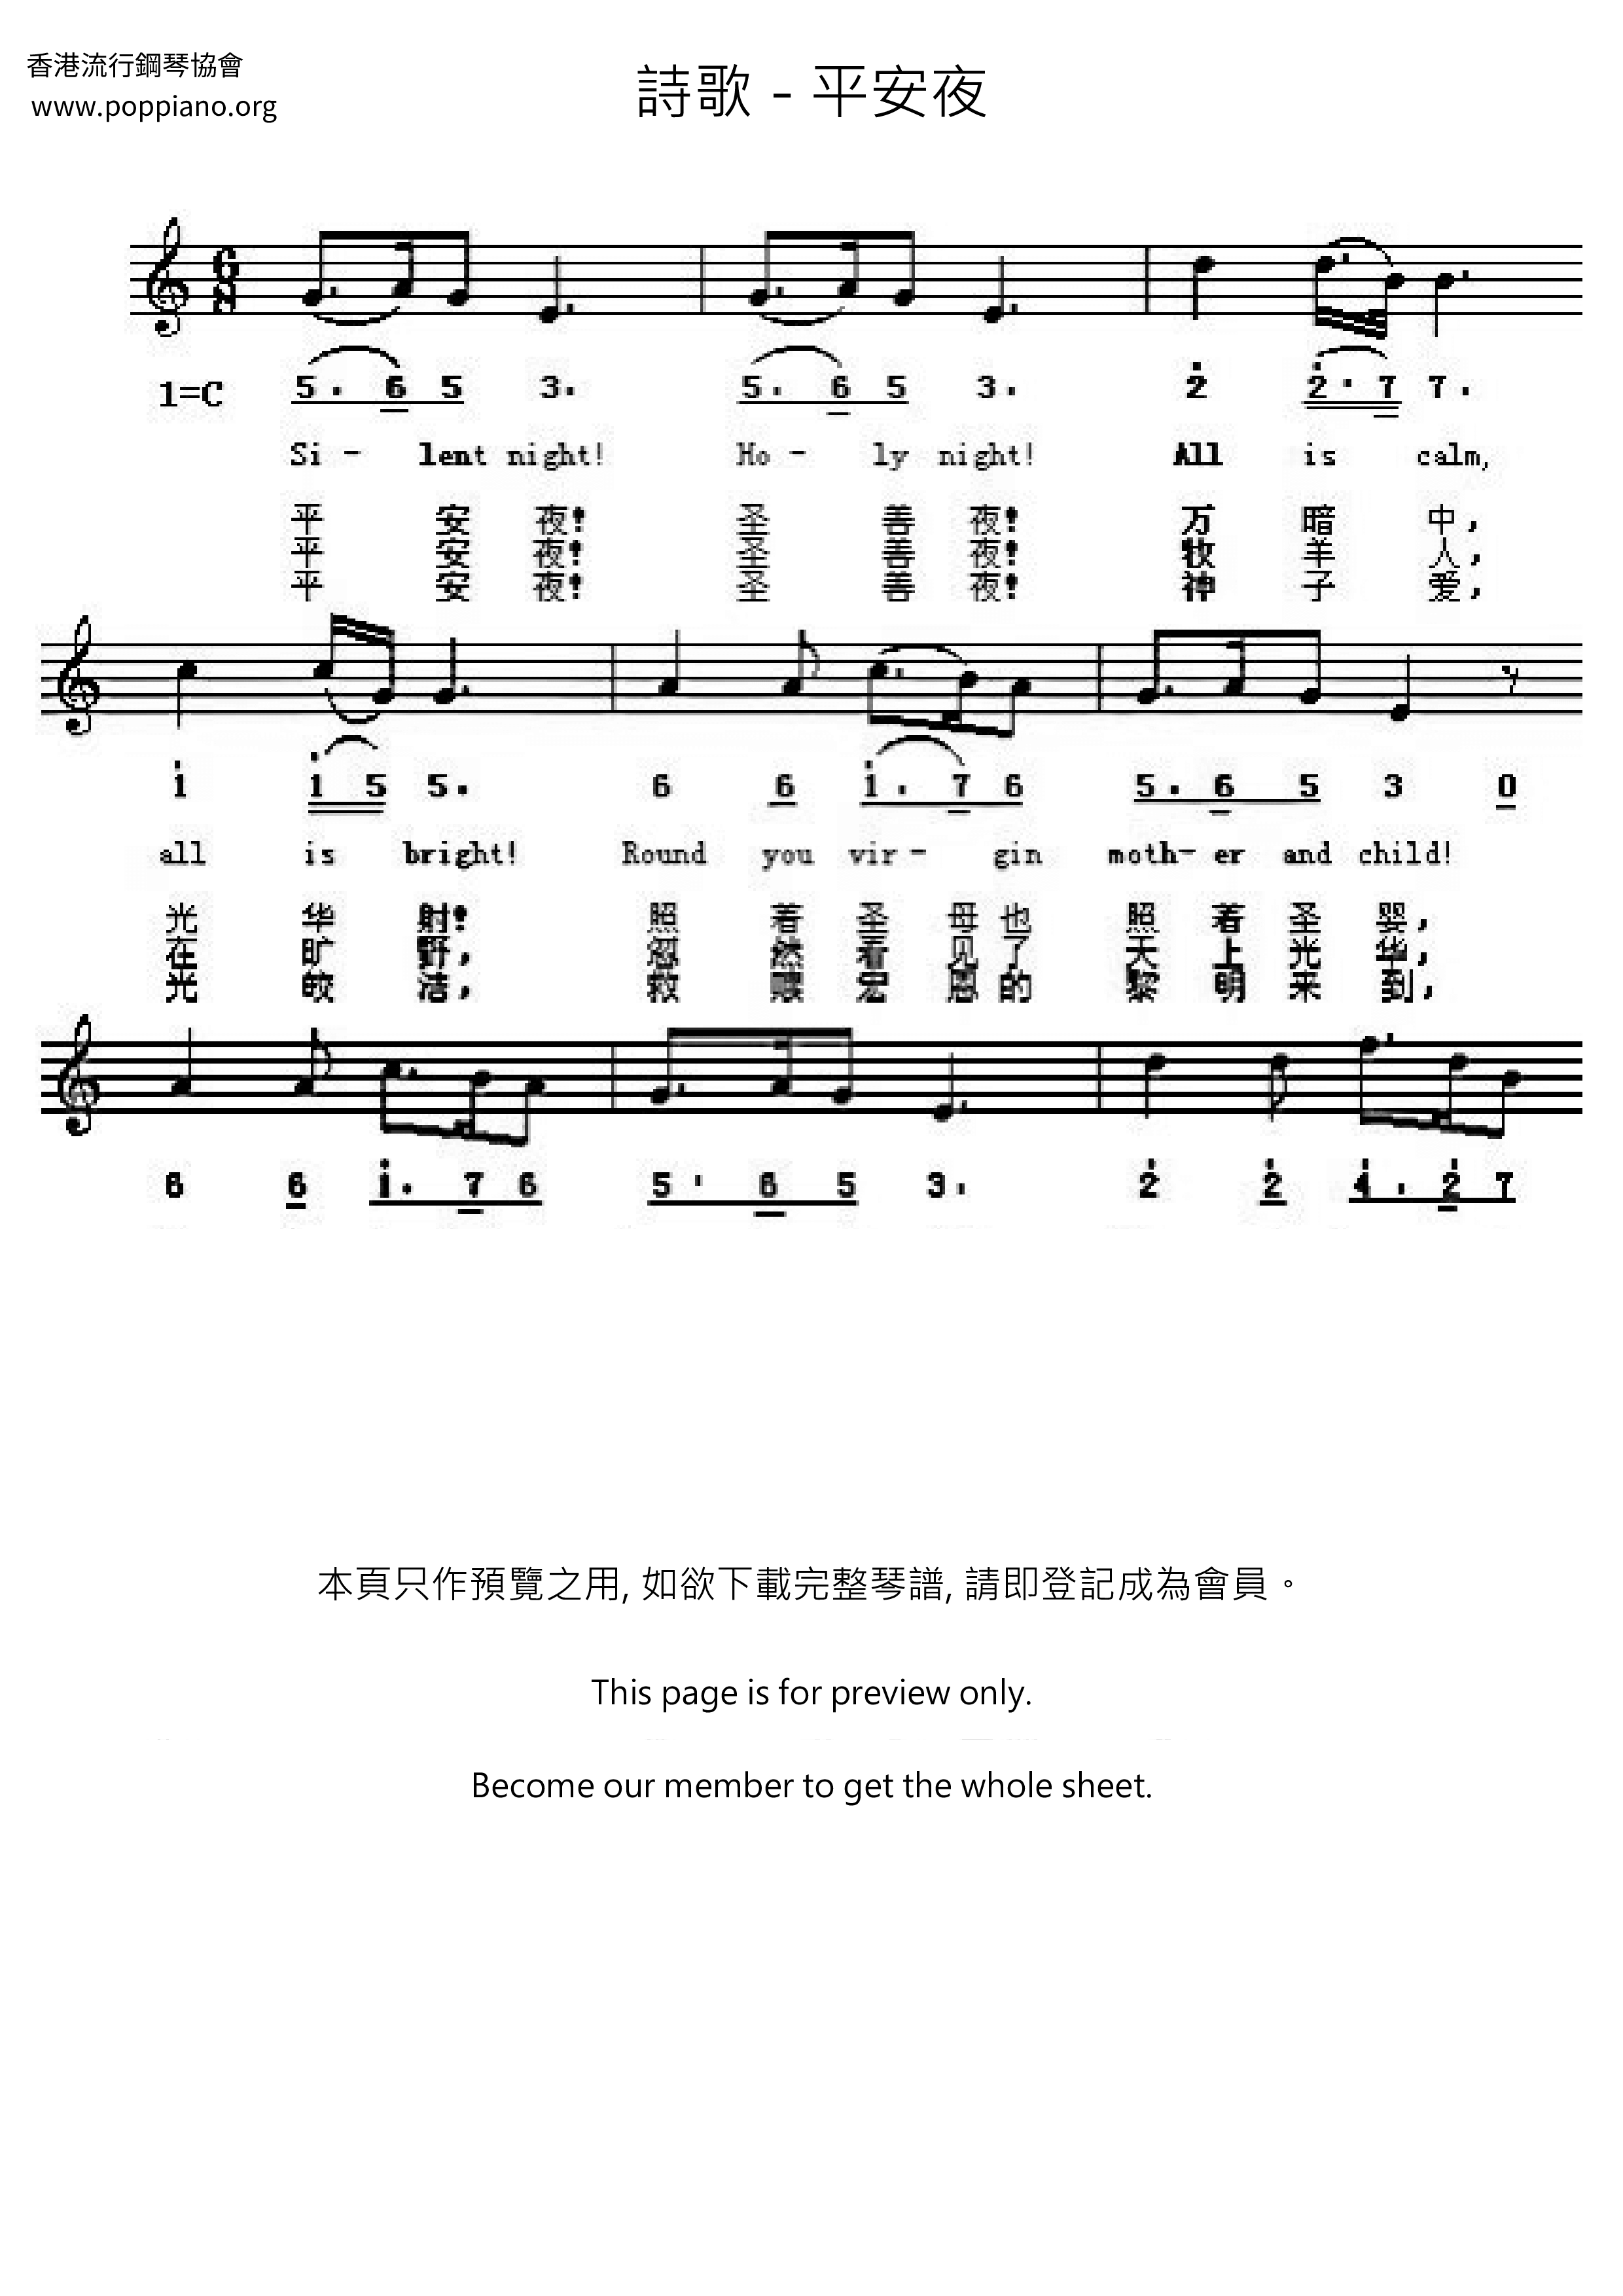 Silent Night (平安夜)ピアノ譜